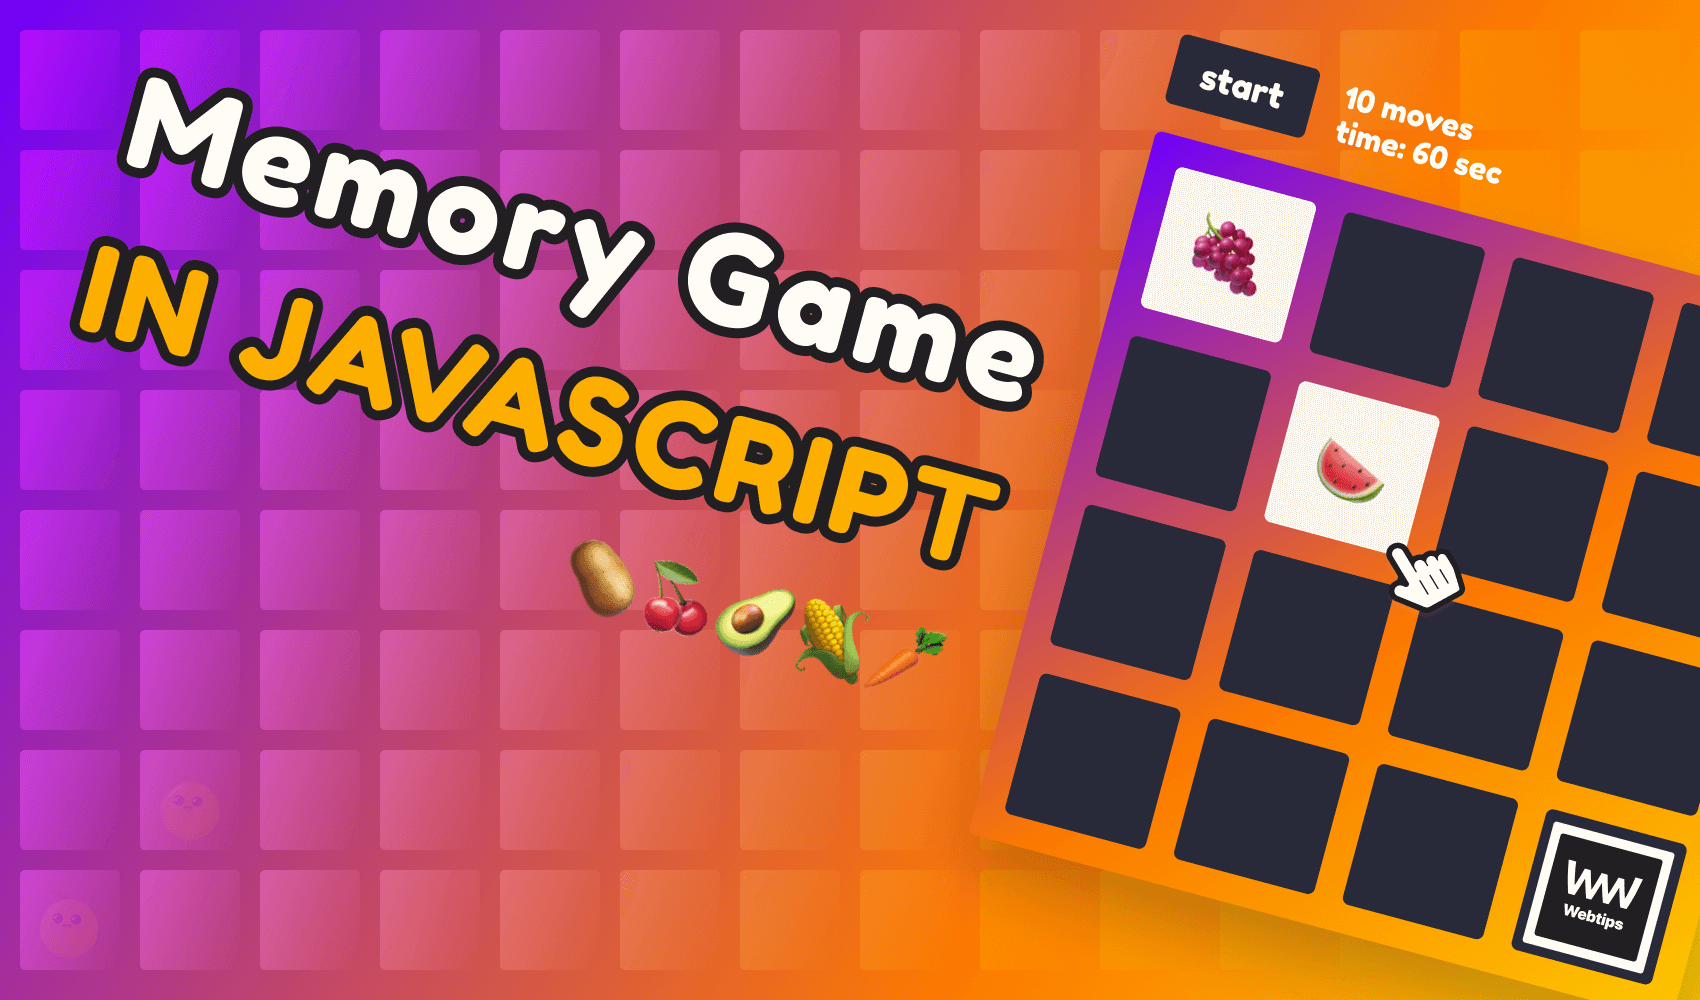 Memory game created in JavaScript